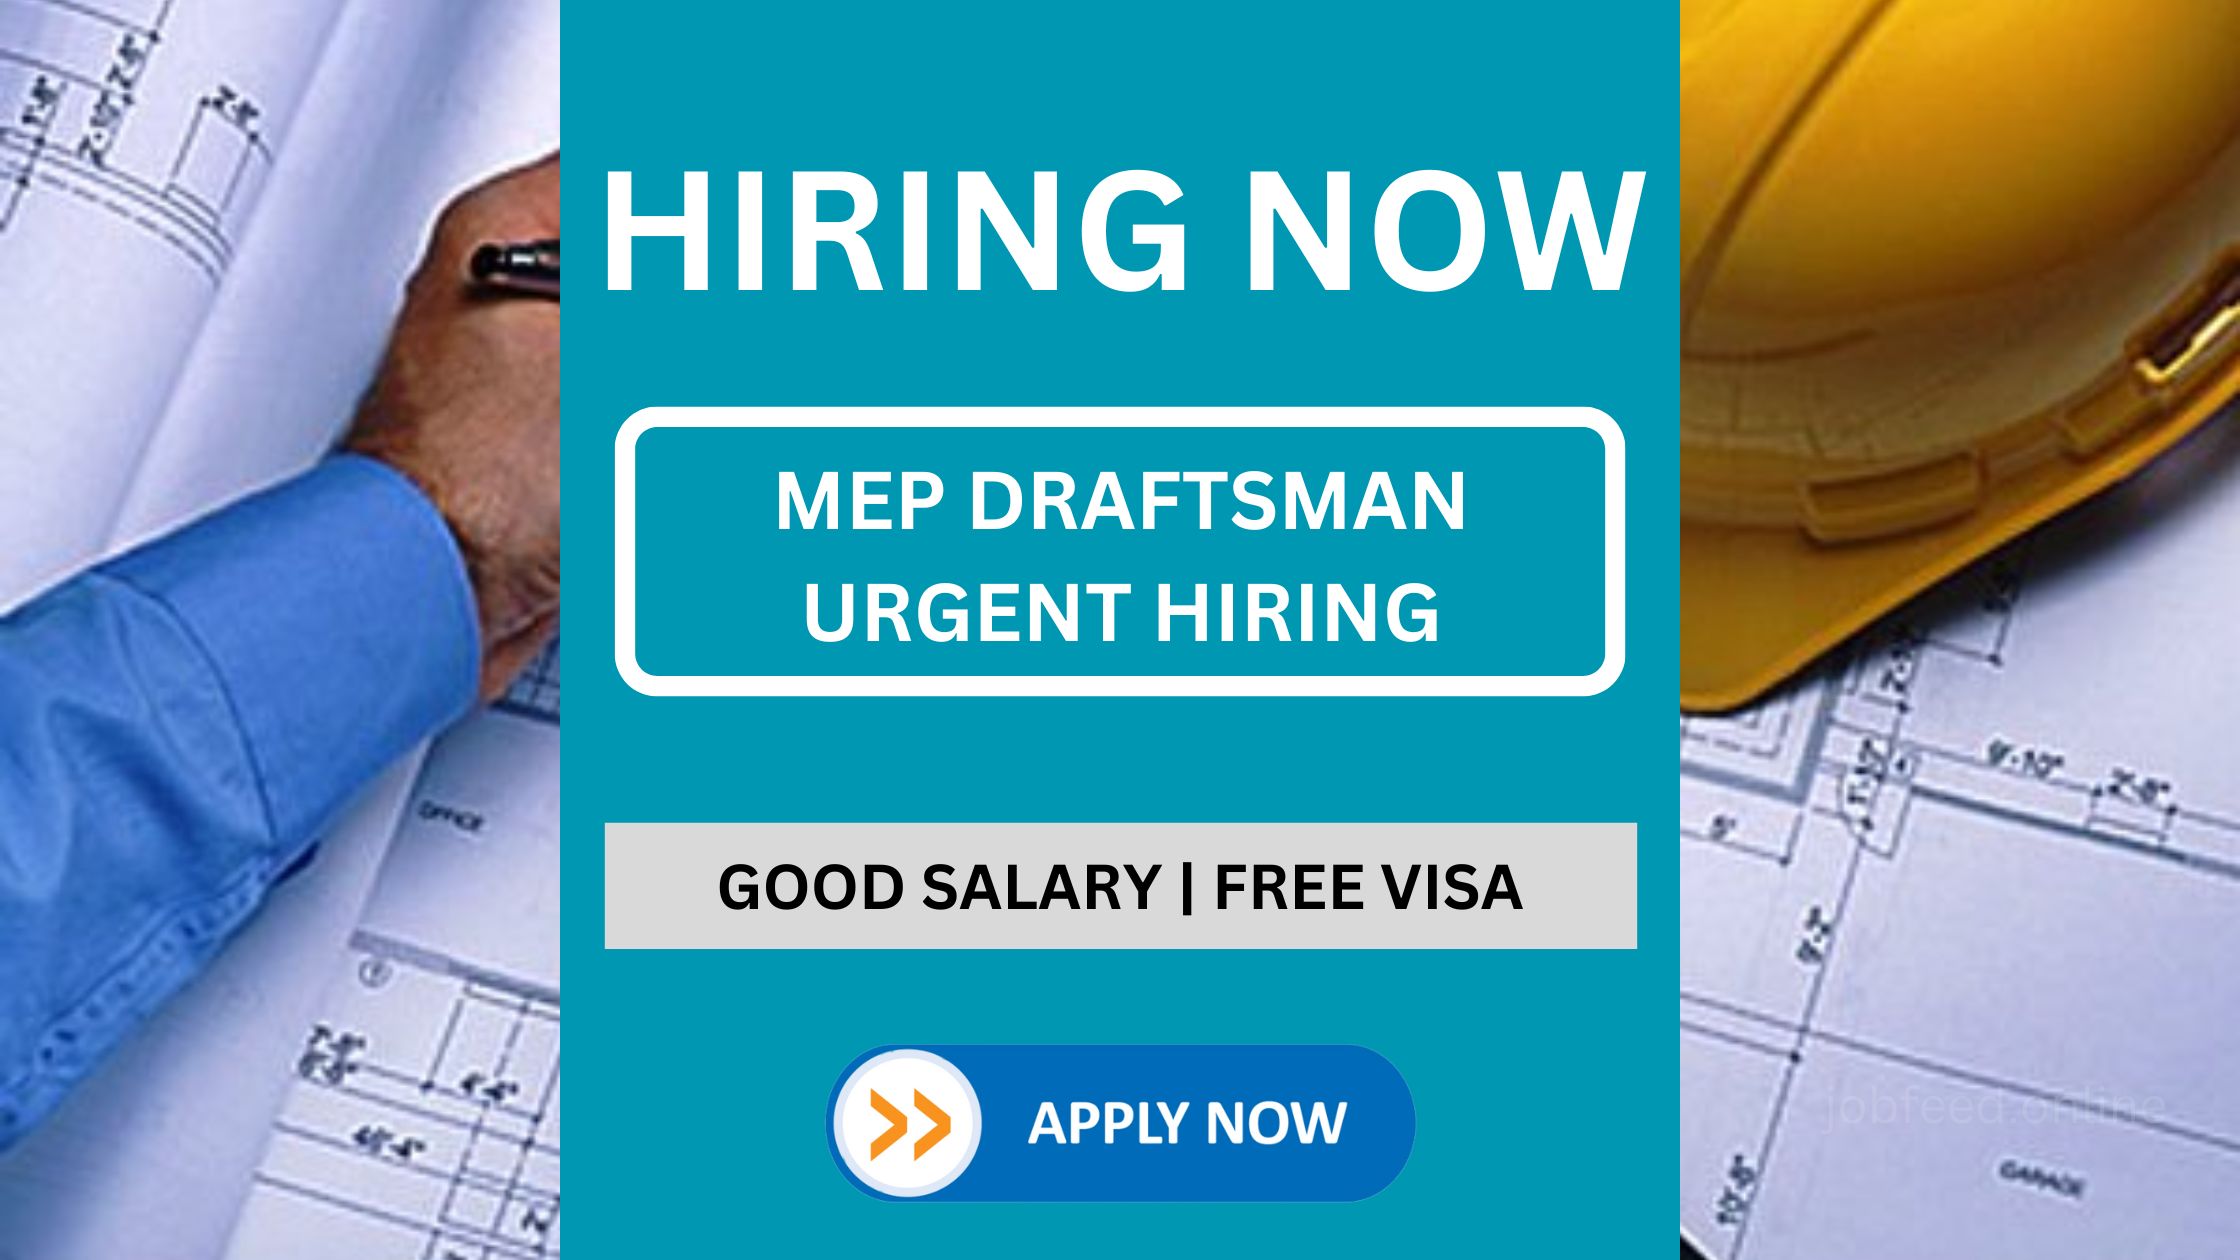 MEP Draftsman Urgent Hiring in UAE